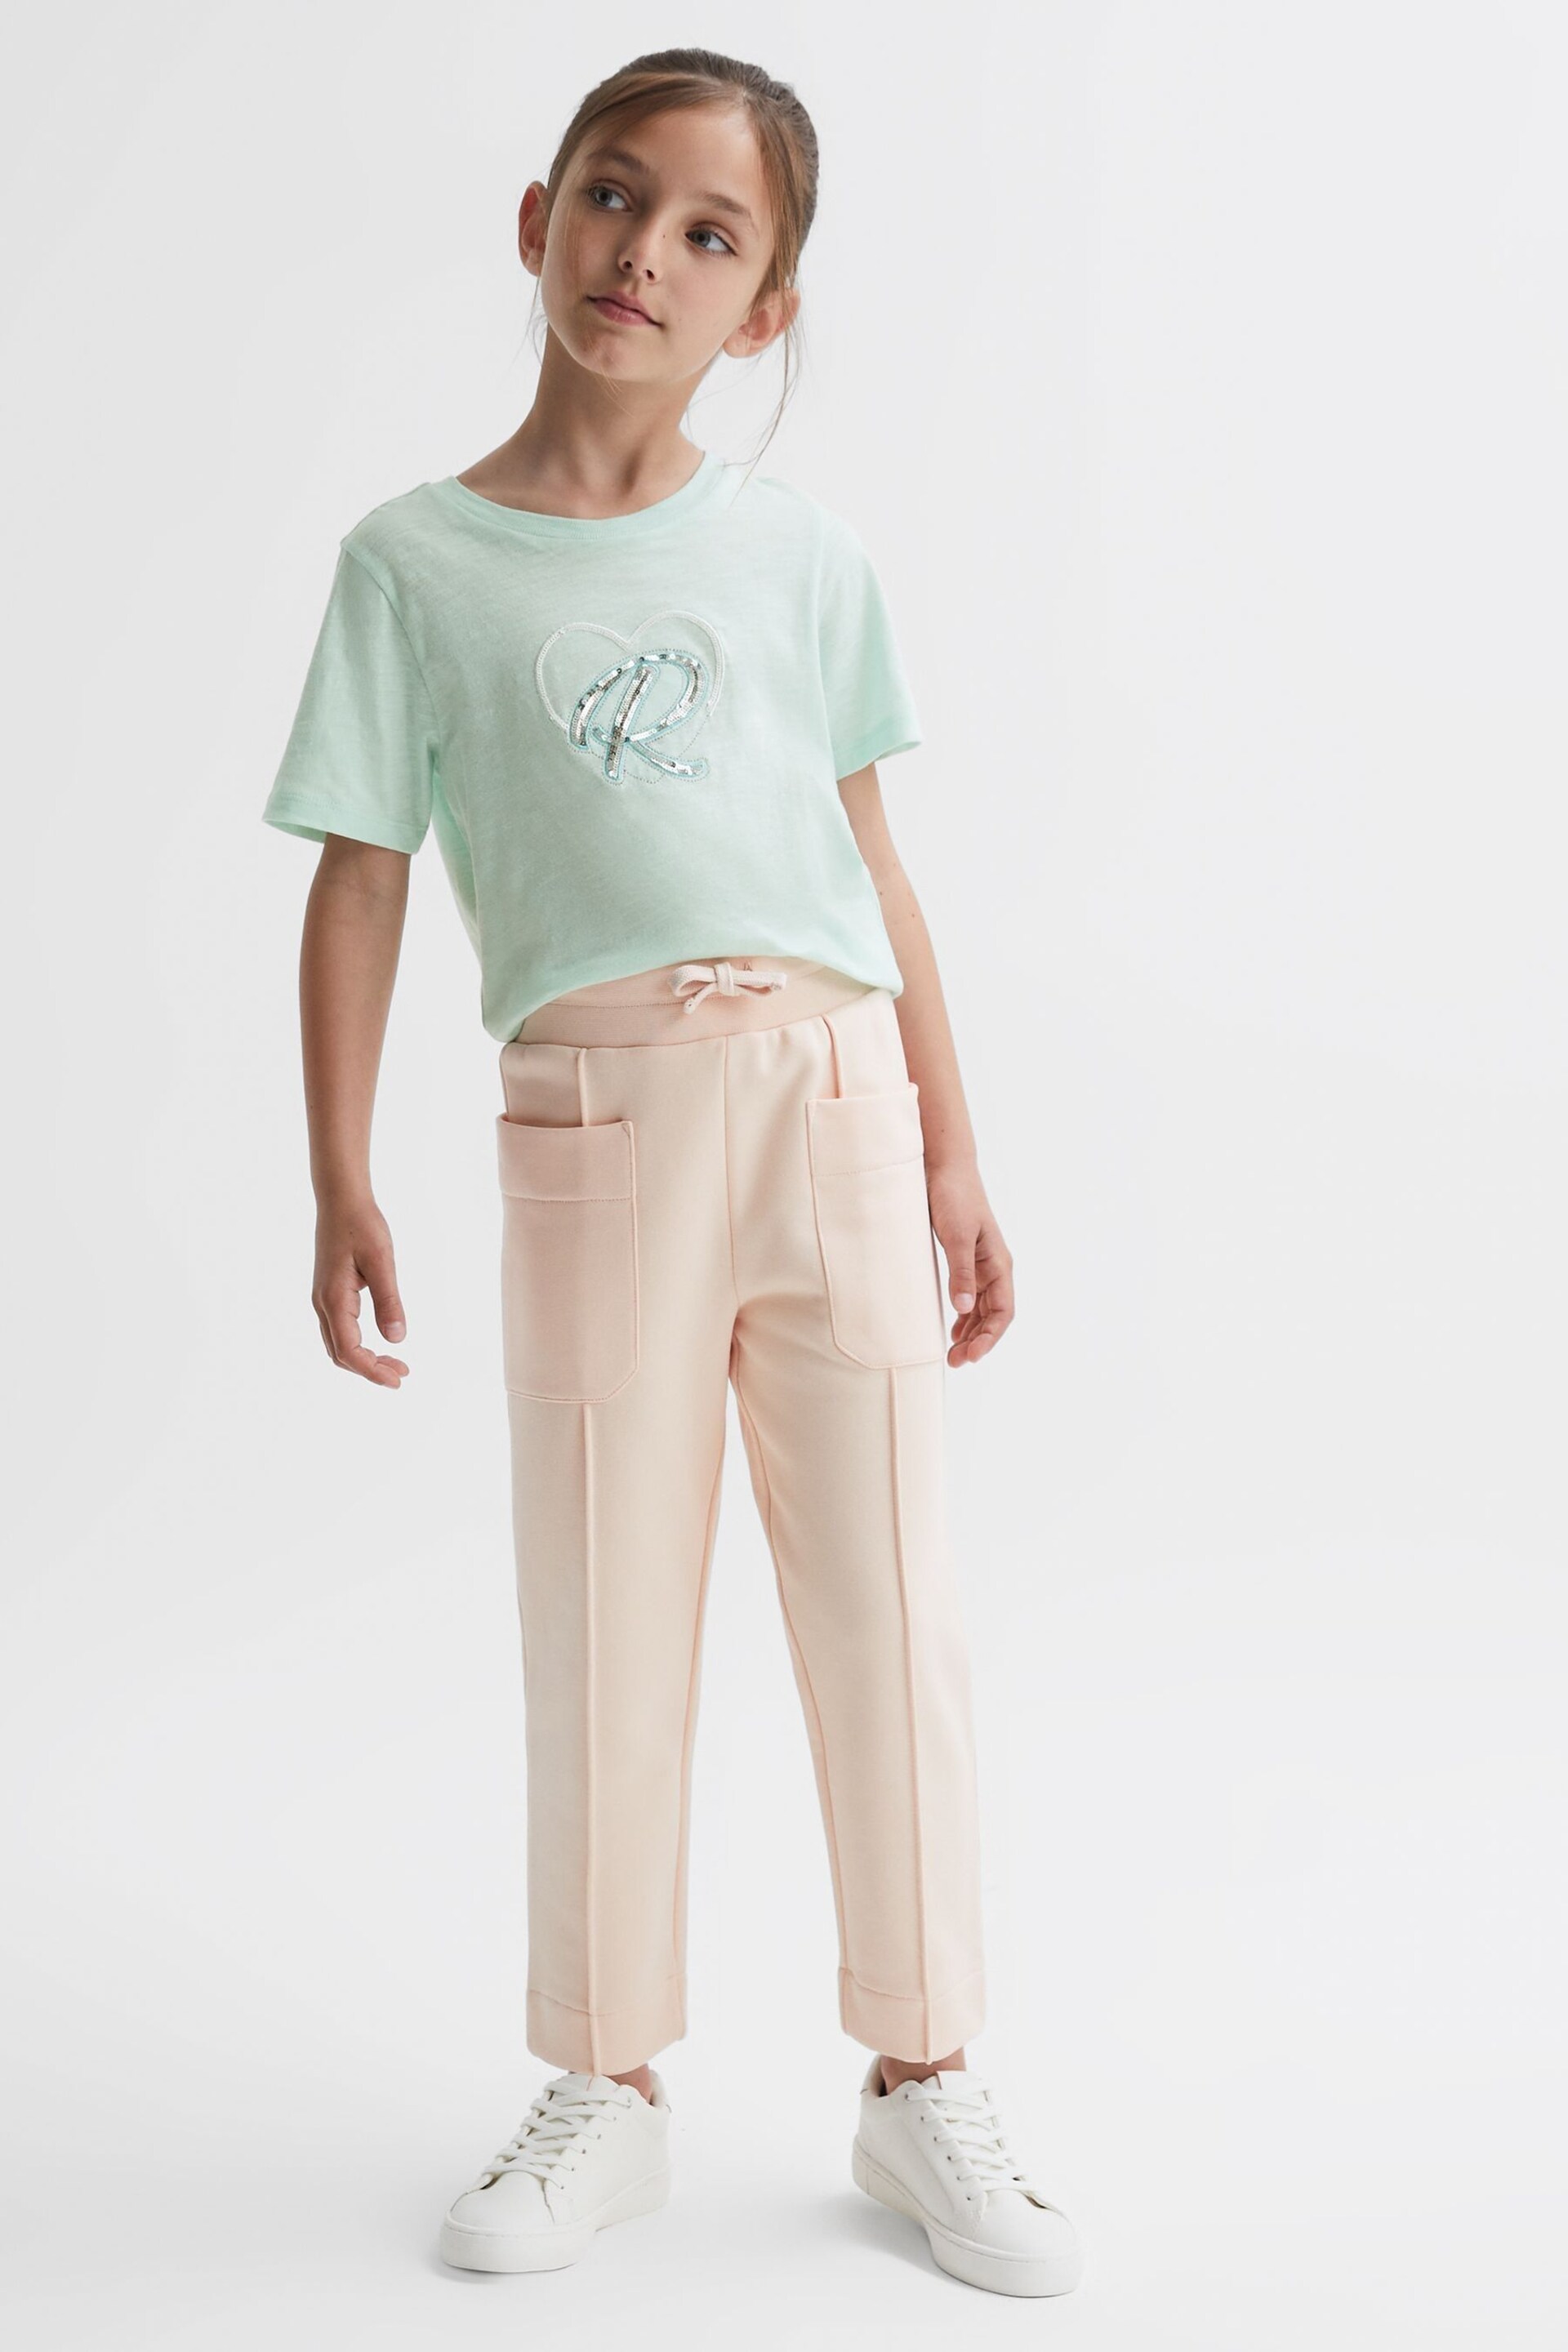 Reiss Sage Swift Junior Embellished Crew Neck T-Shirt - Image 4 of 6